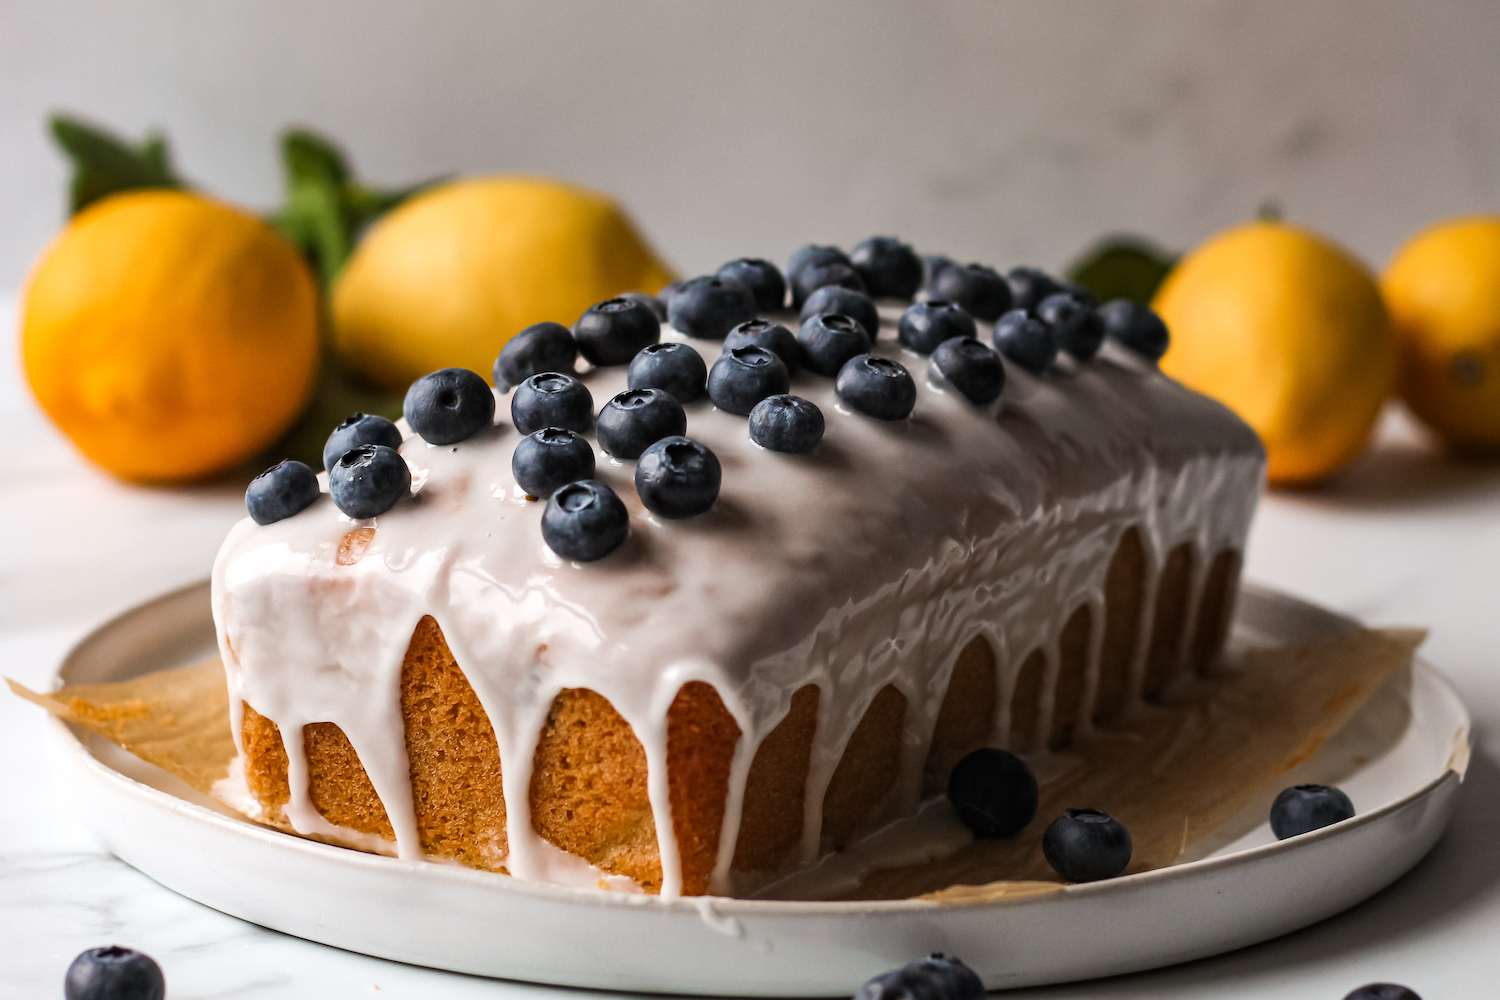 Lemon and Berry Icebox Cake Recipe | Ree Drummond | Food Network